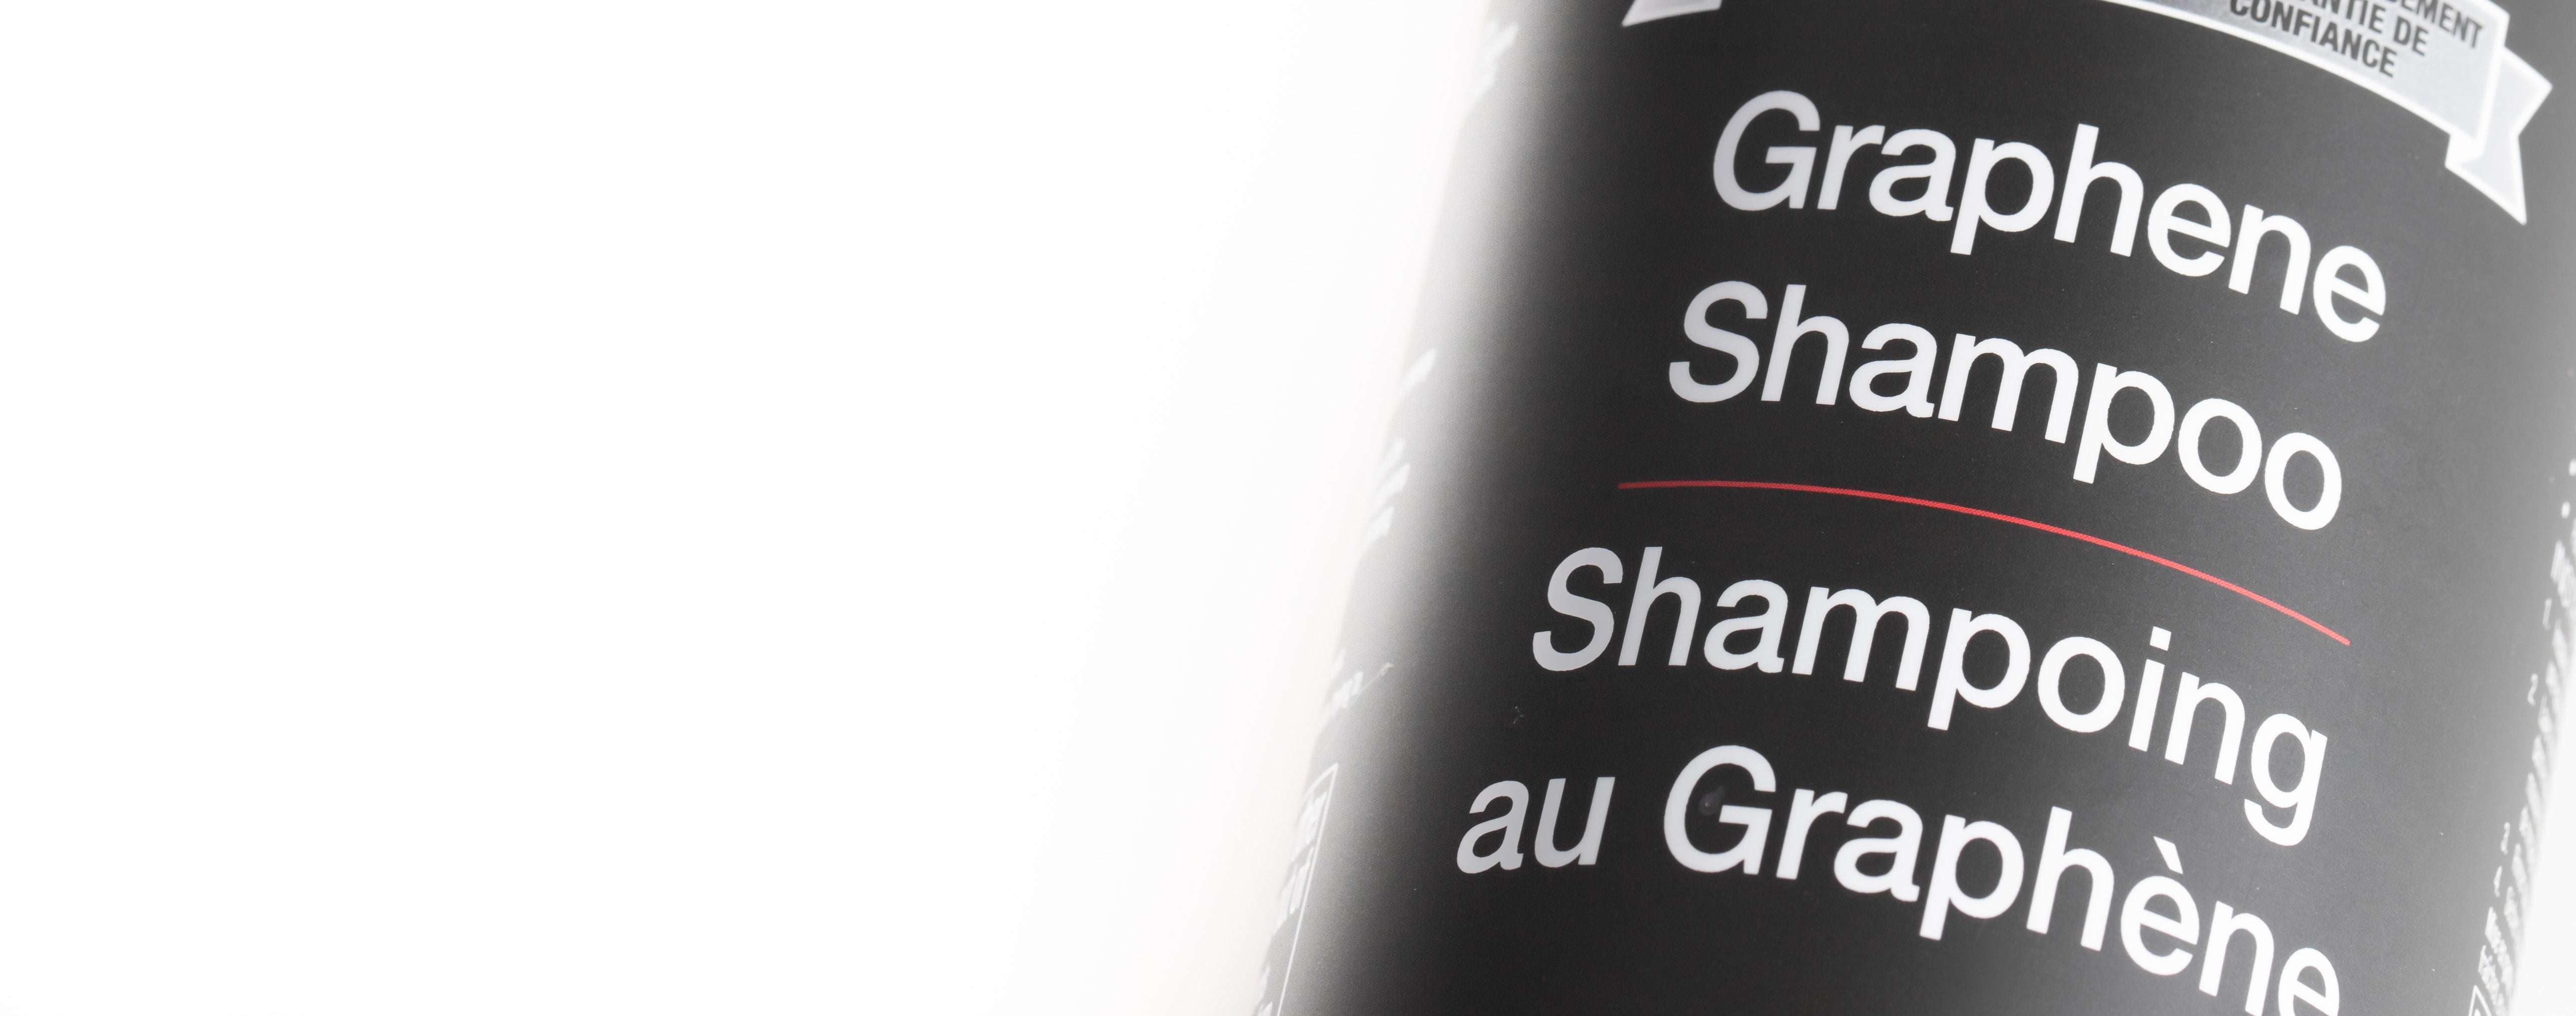 Graphene Shampoo™ - Adam's Polishes